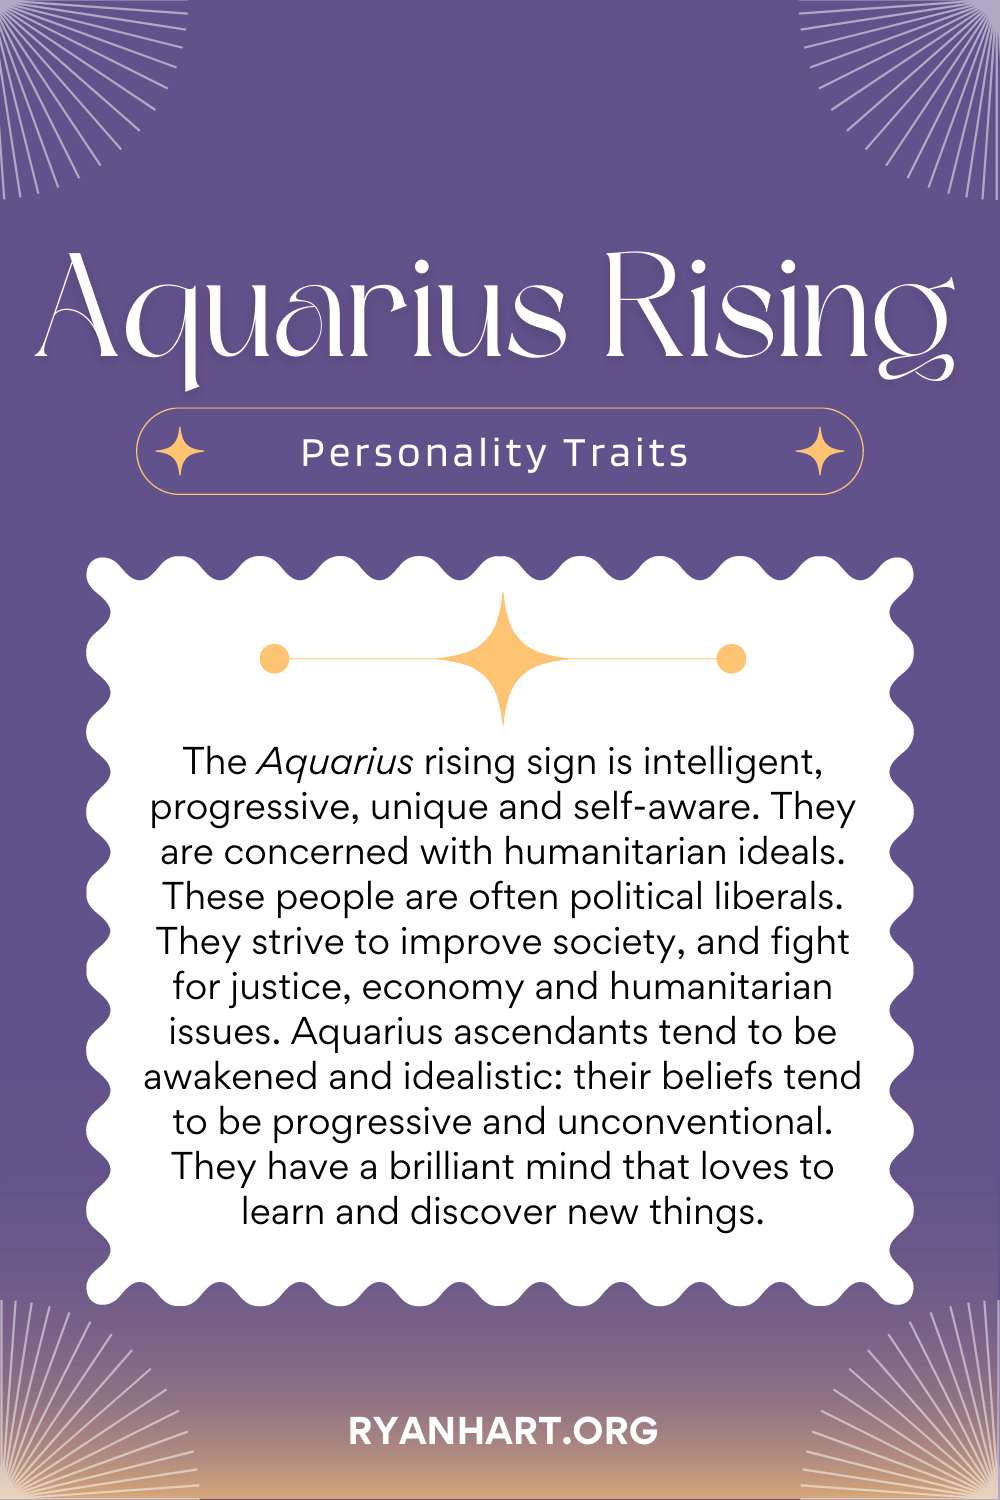  Aquarius တက်လာခြင်း လက္ခဏာနှင့် Ascendant Personality လက္ခဏာများ